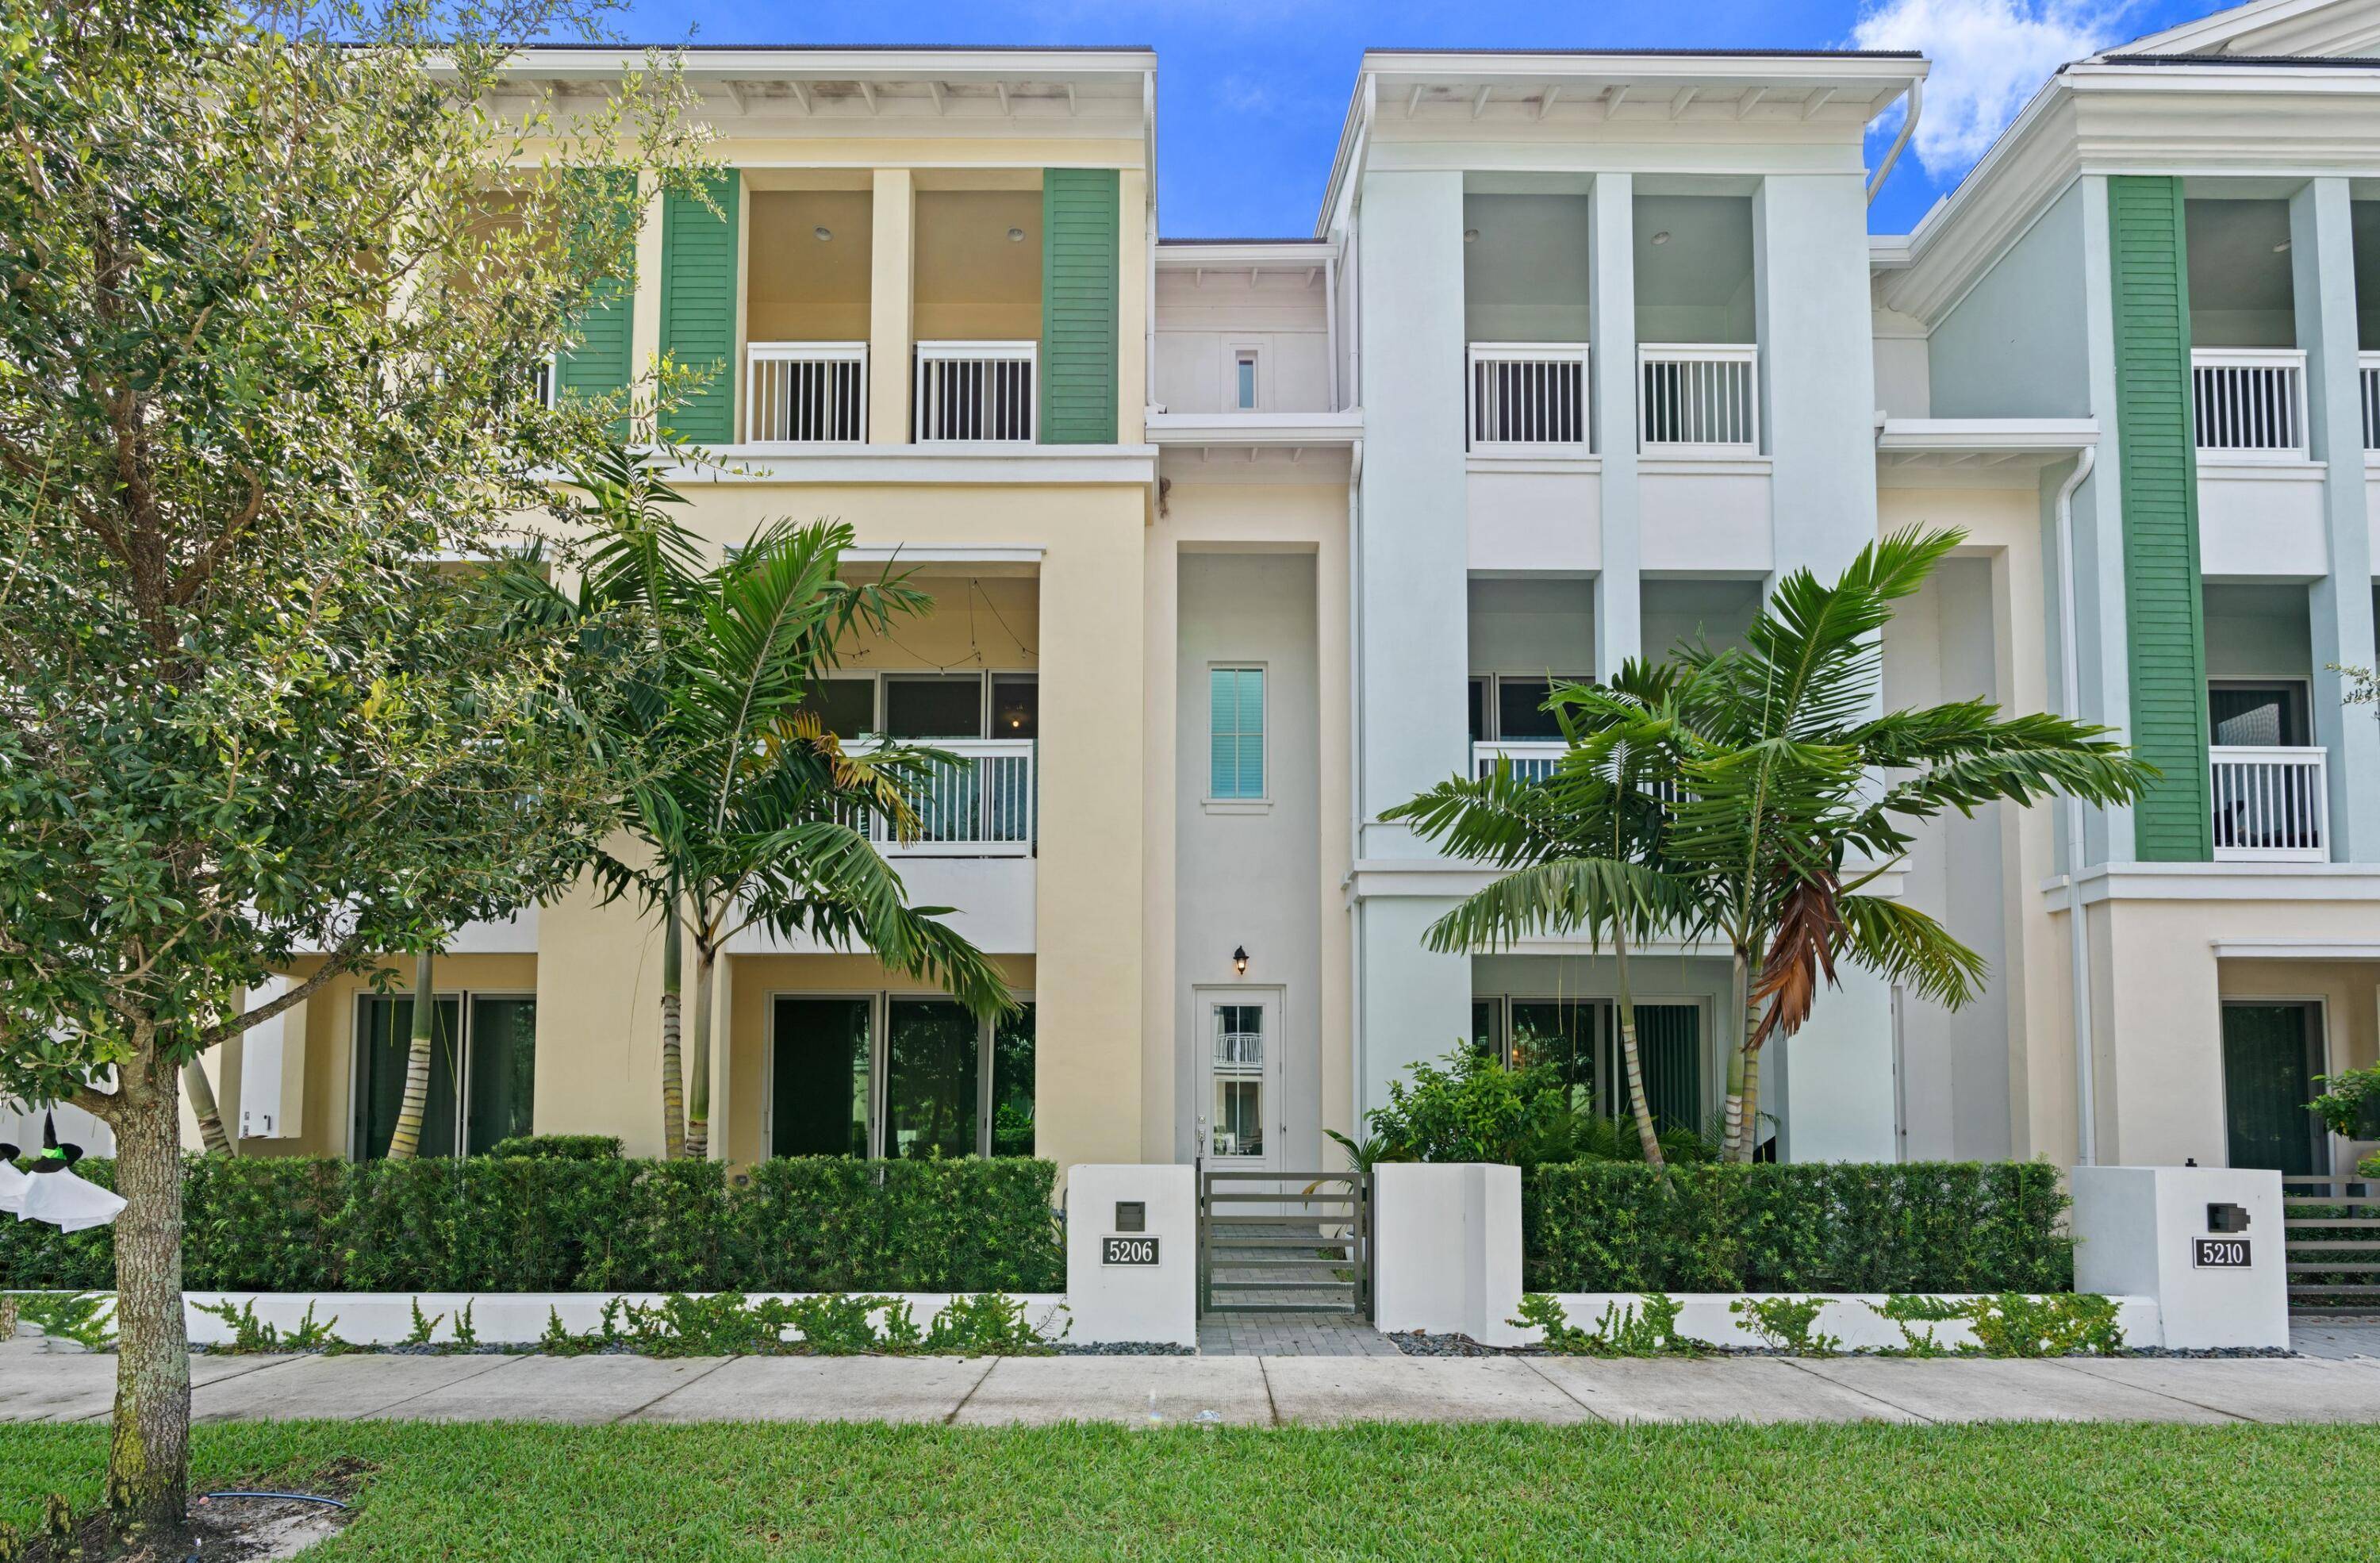 Welcome to 5206 Beckman Terrace in Alton, Palm Beach Gardens.